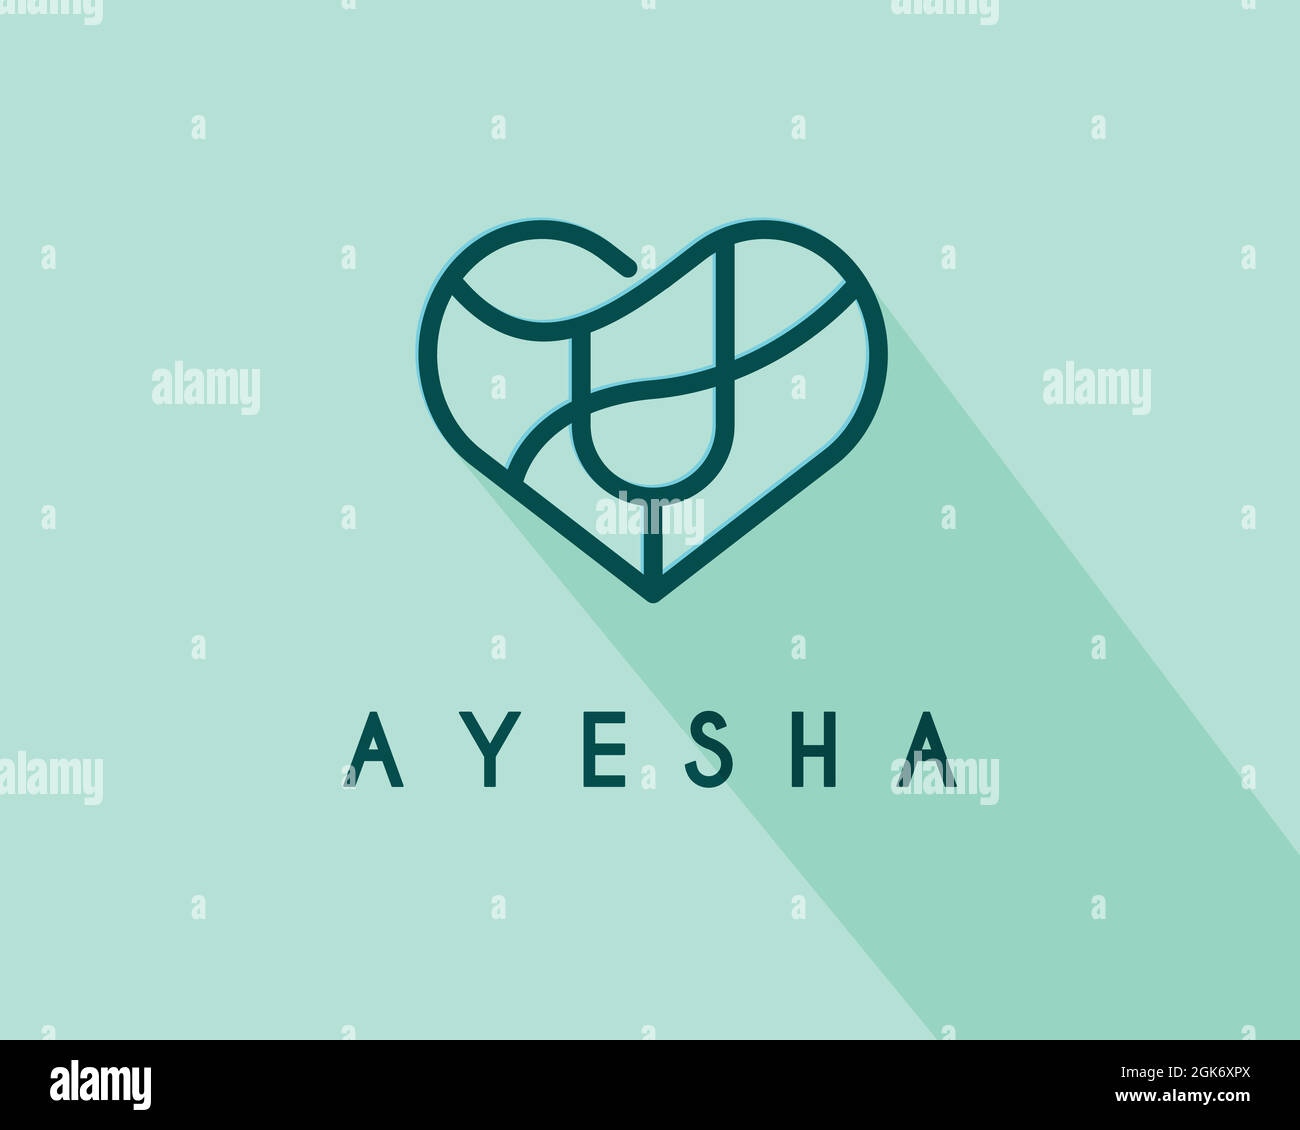 logo name Ayesha usable logo design for private logo, business ...